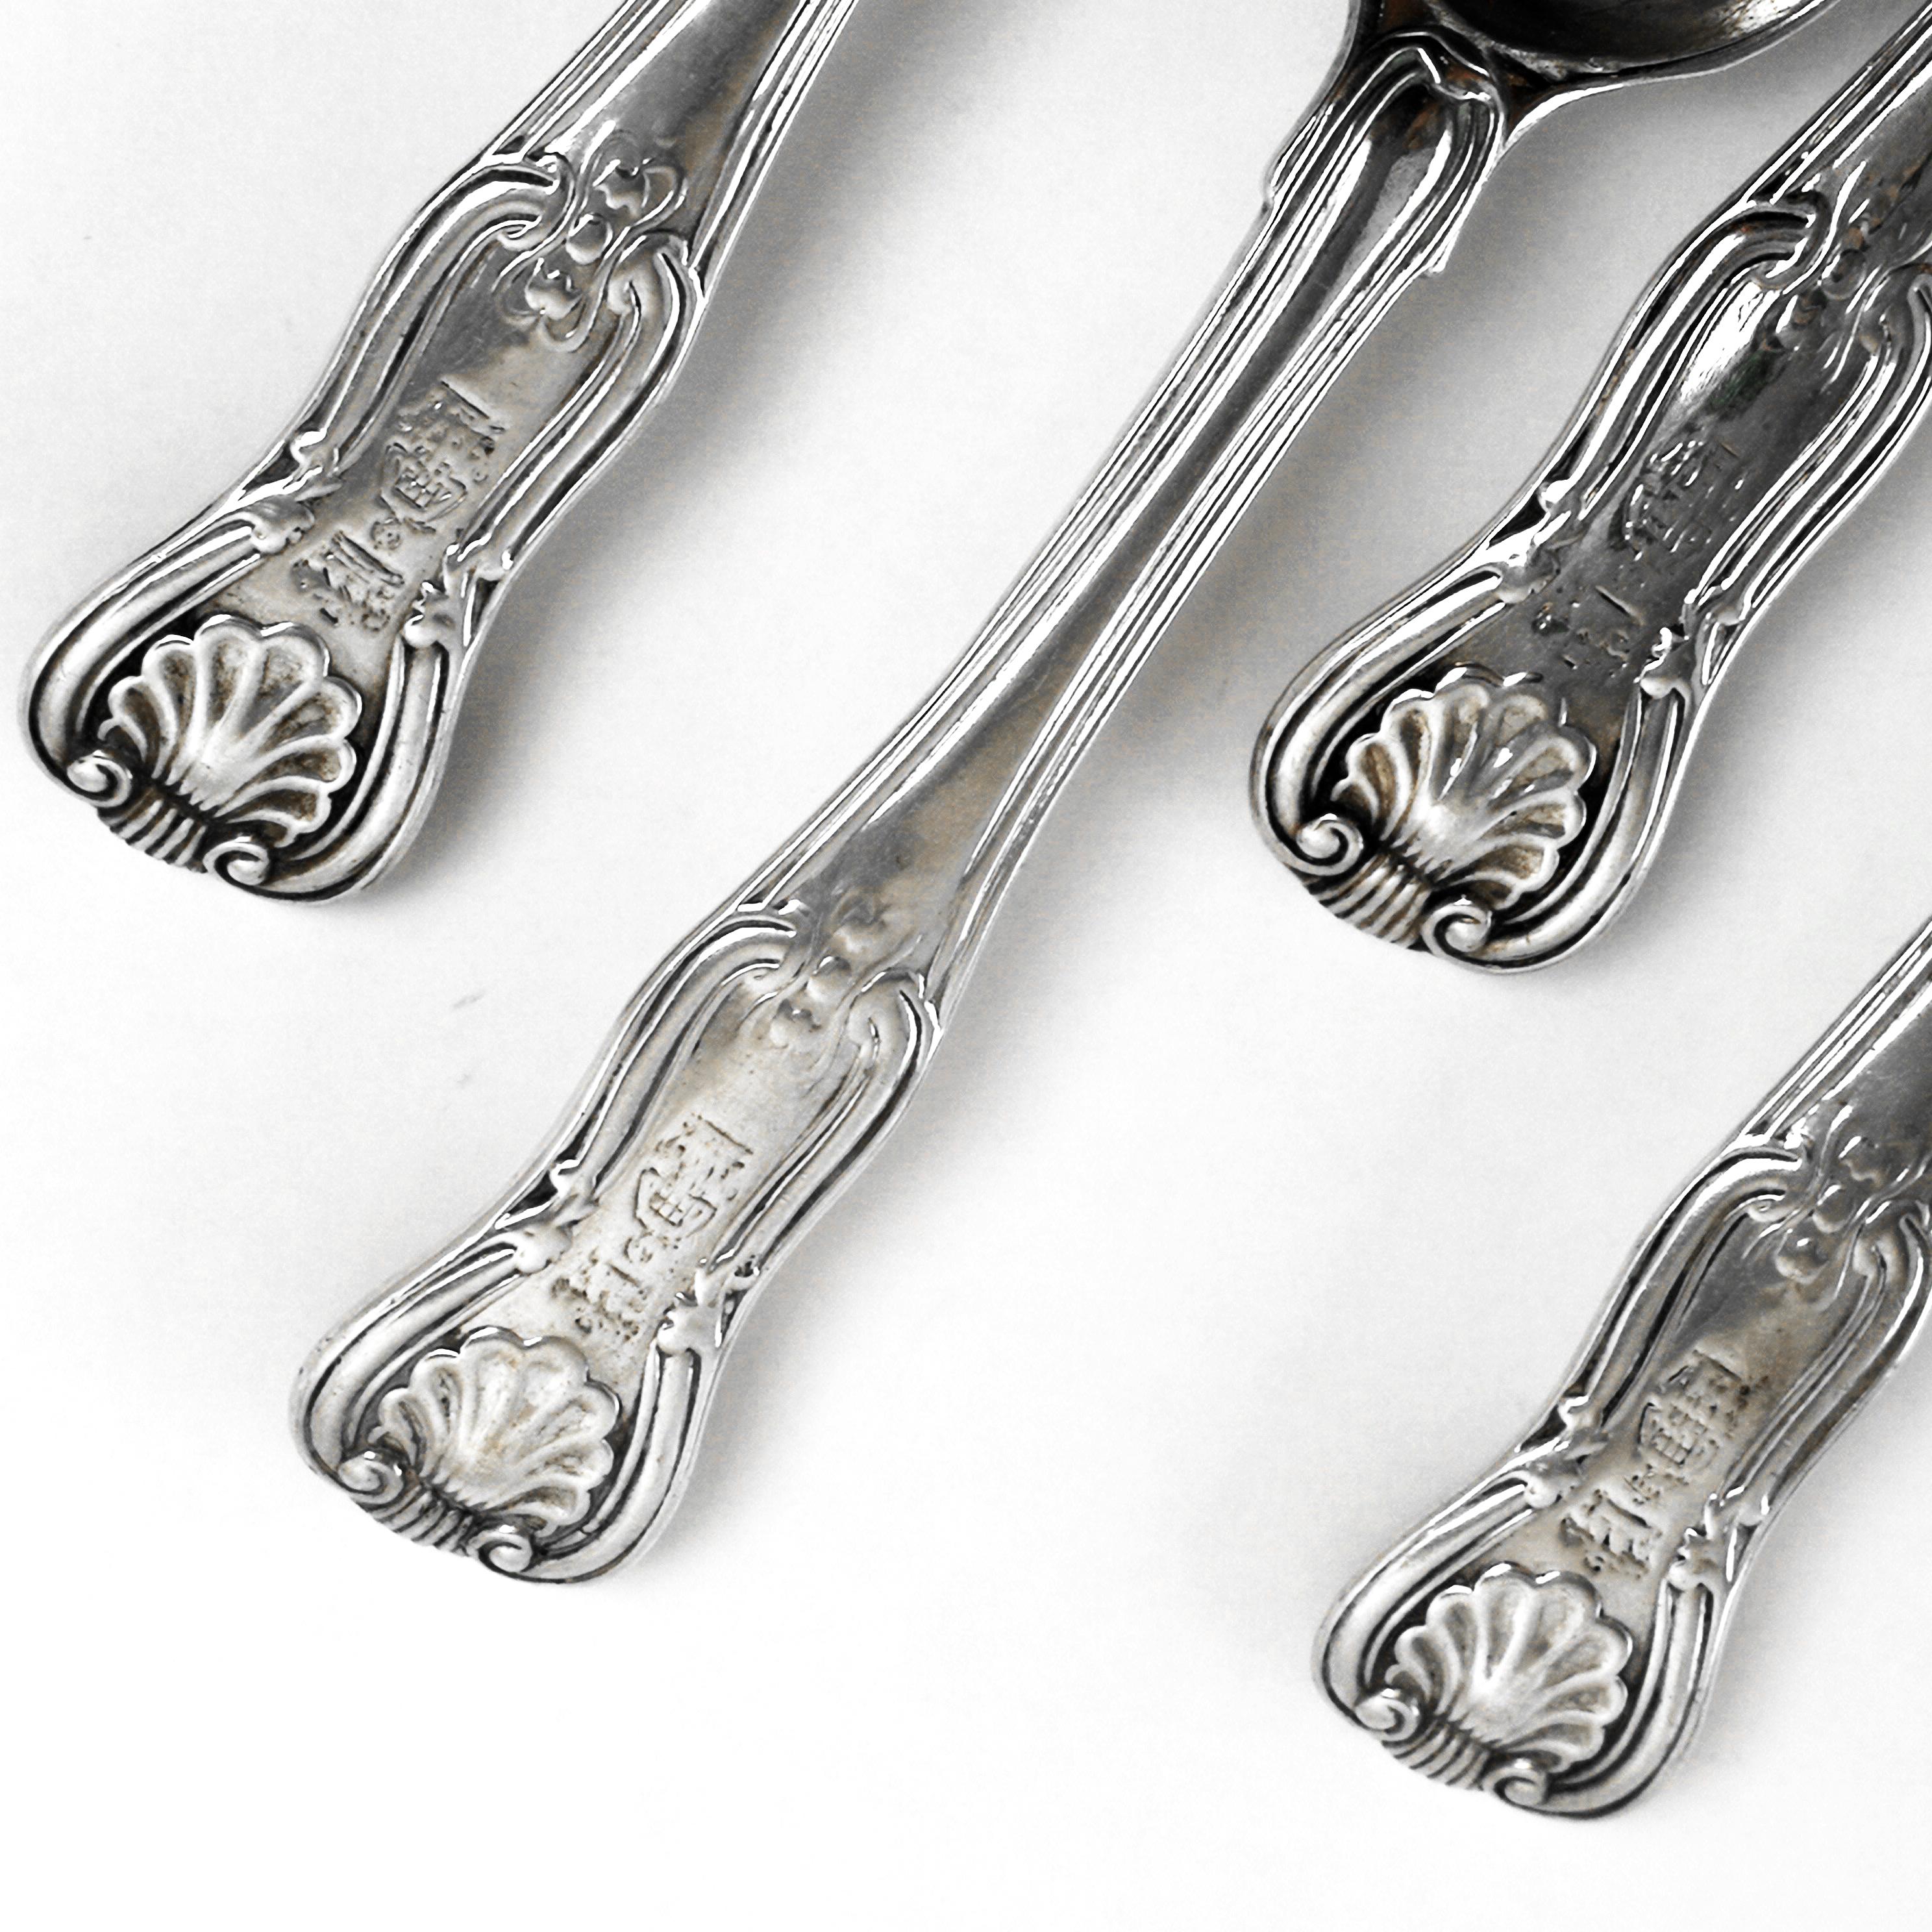 Set 4 Antique Sterling Silver Salts & Spoons / Salt Pinch Pots 1808/9 George III 7